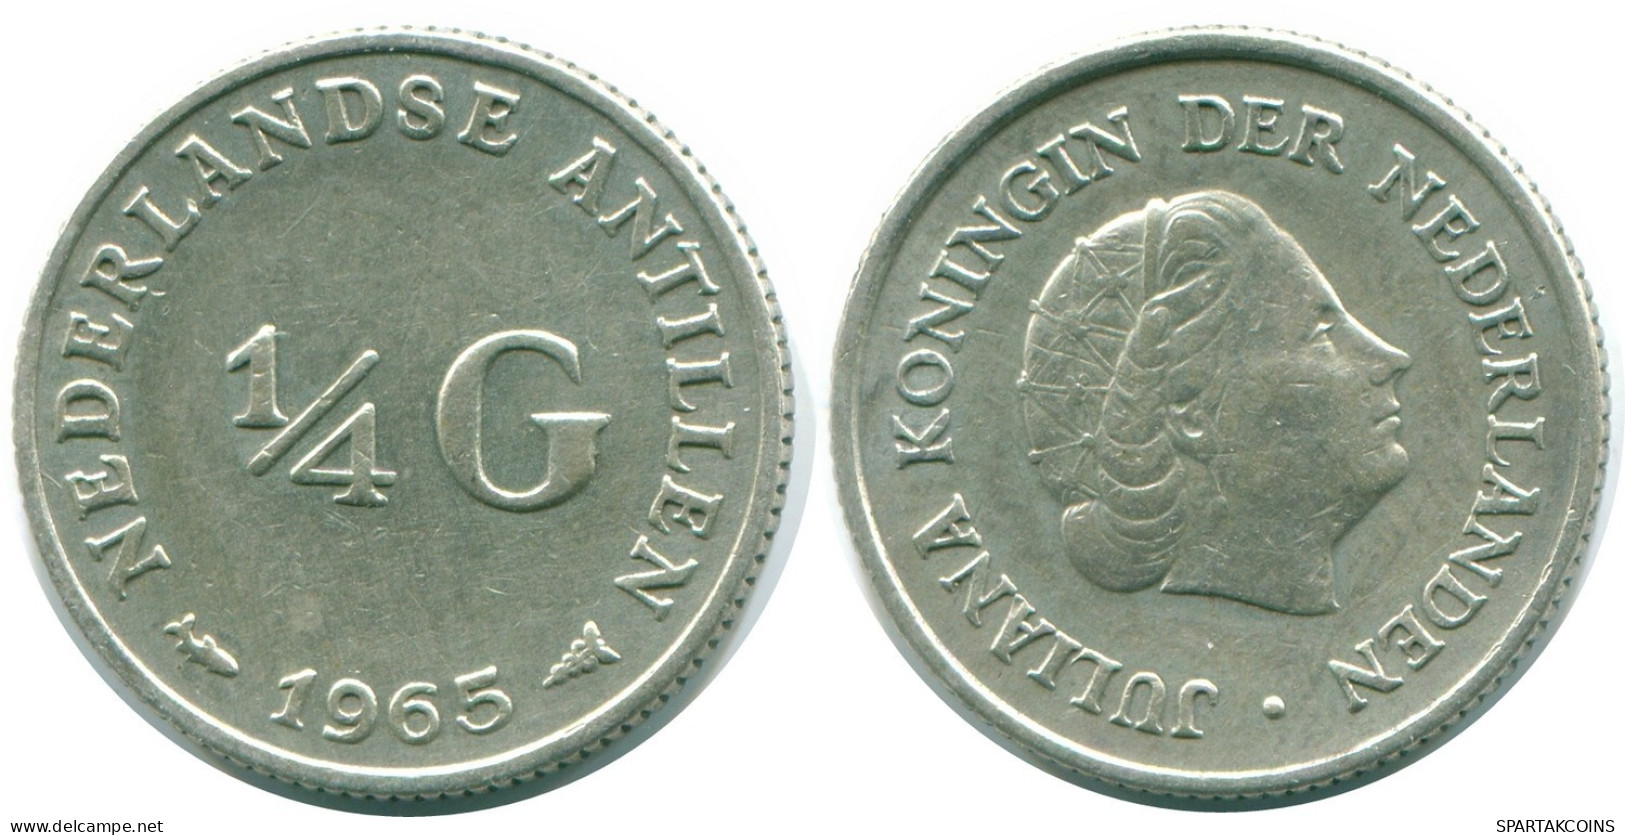 1/4 GULDEN 1965 NIEDERLÄNDISCHE ANTILLEN SILBER Koloniale Münze #NL11301.4.D.A - Netherlands Antilles